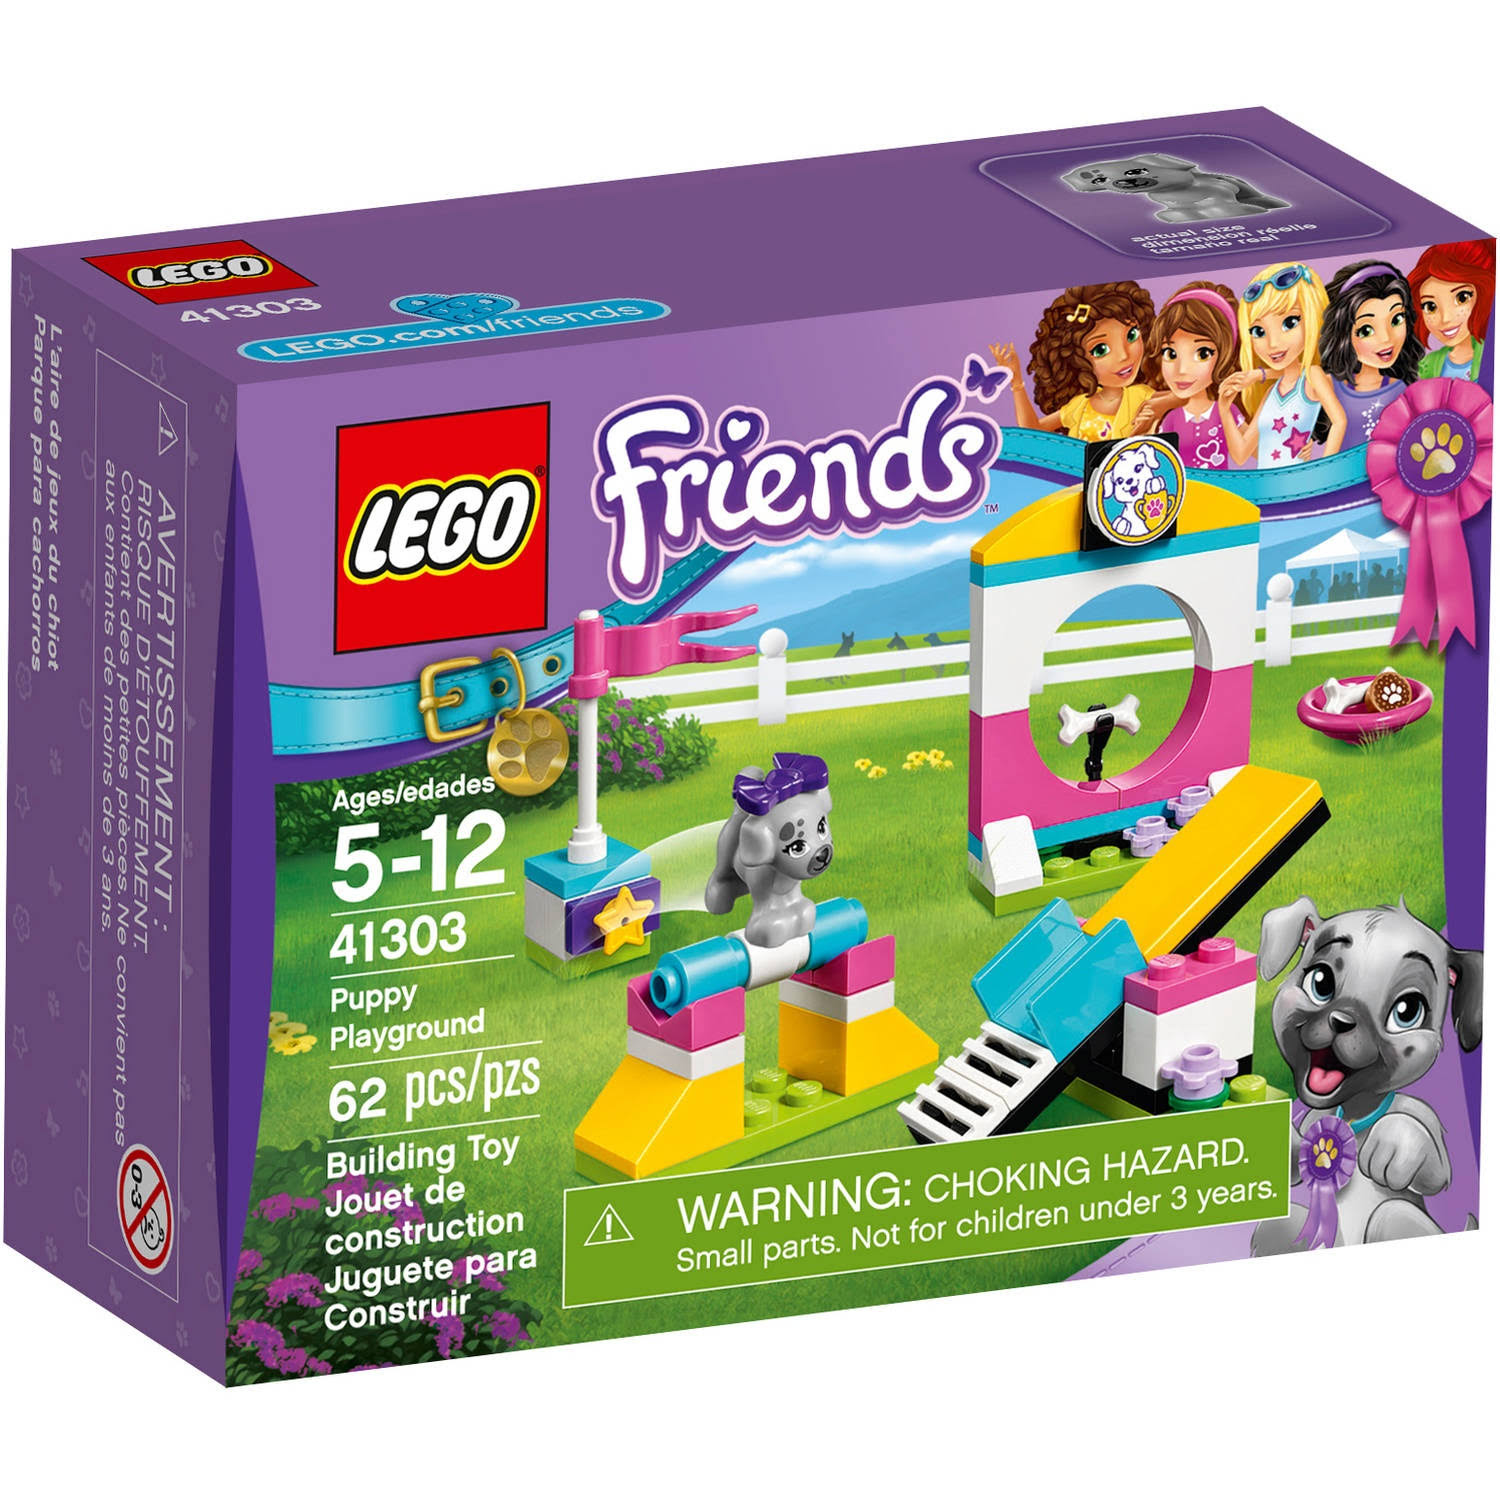 Lego Friends Puppy Playground 41303 Building Kit